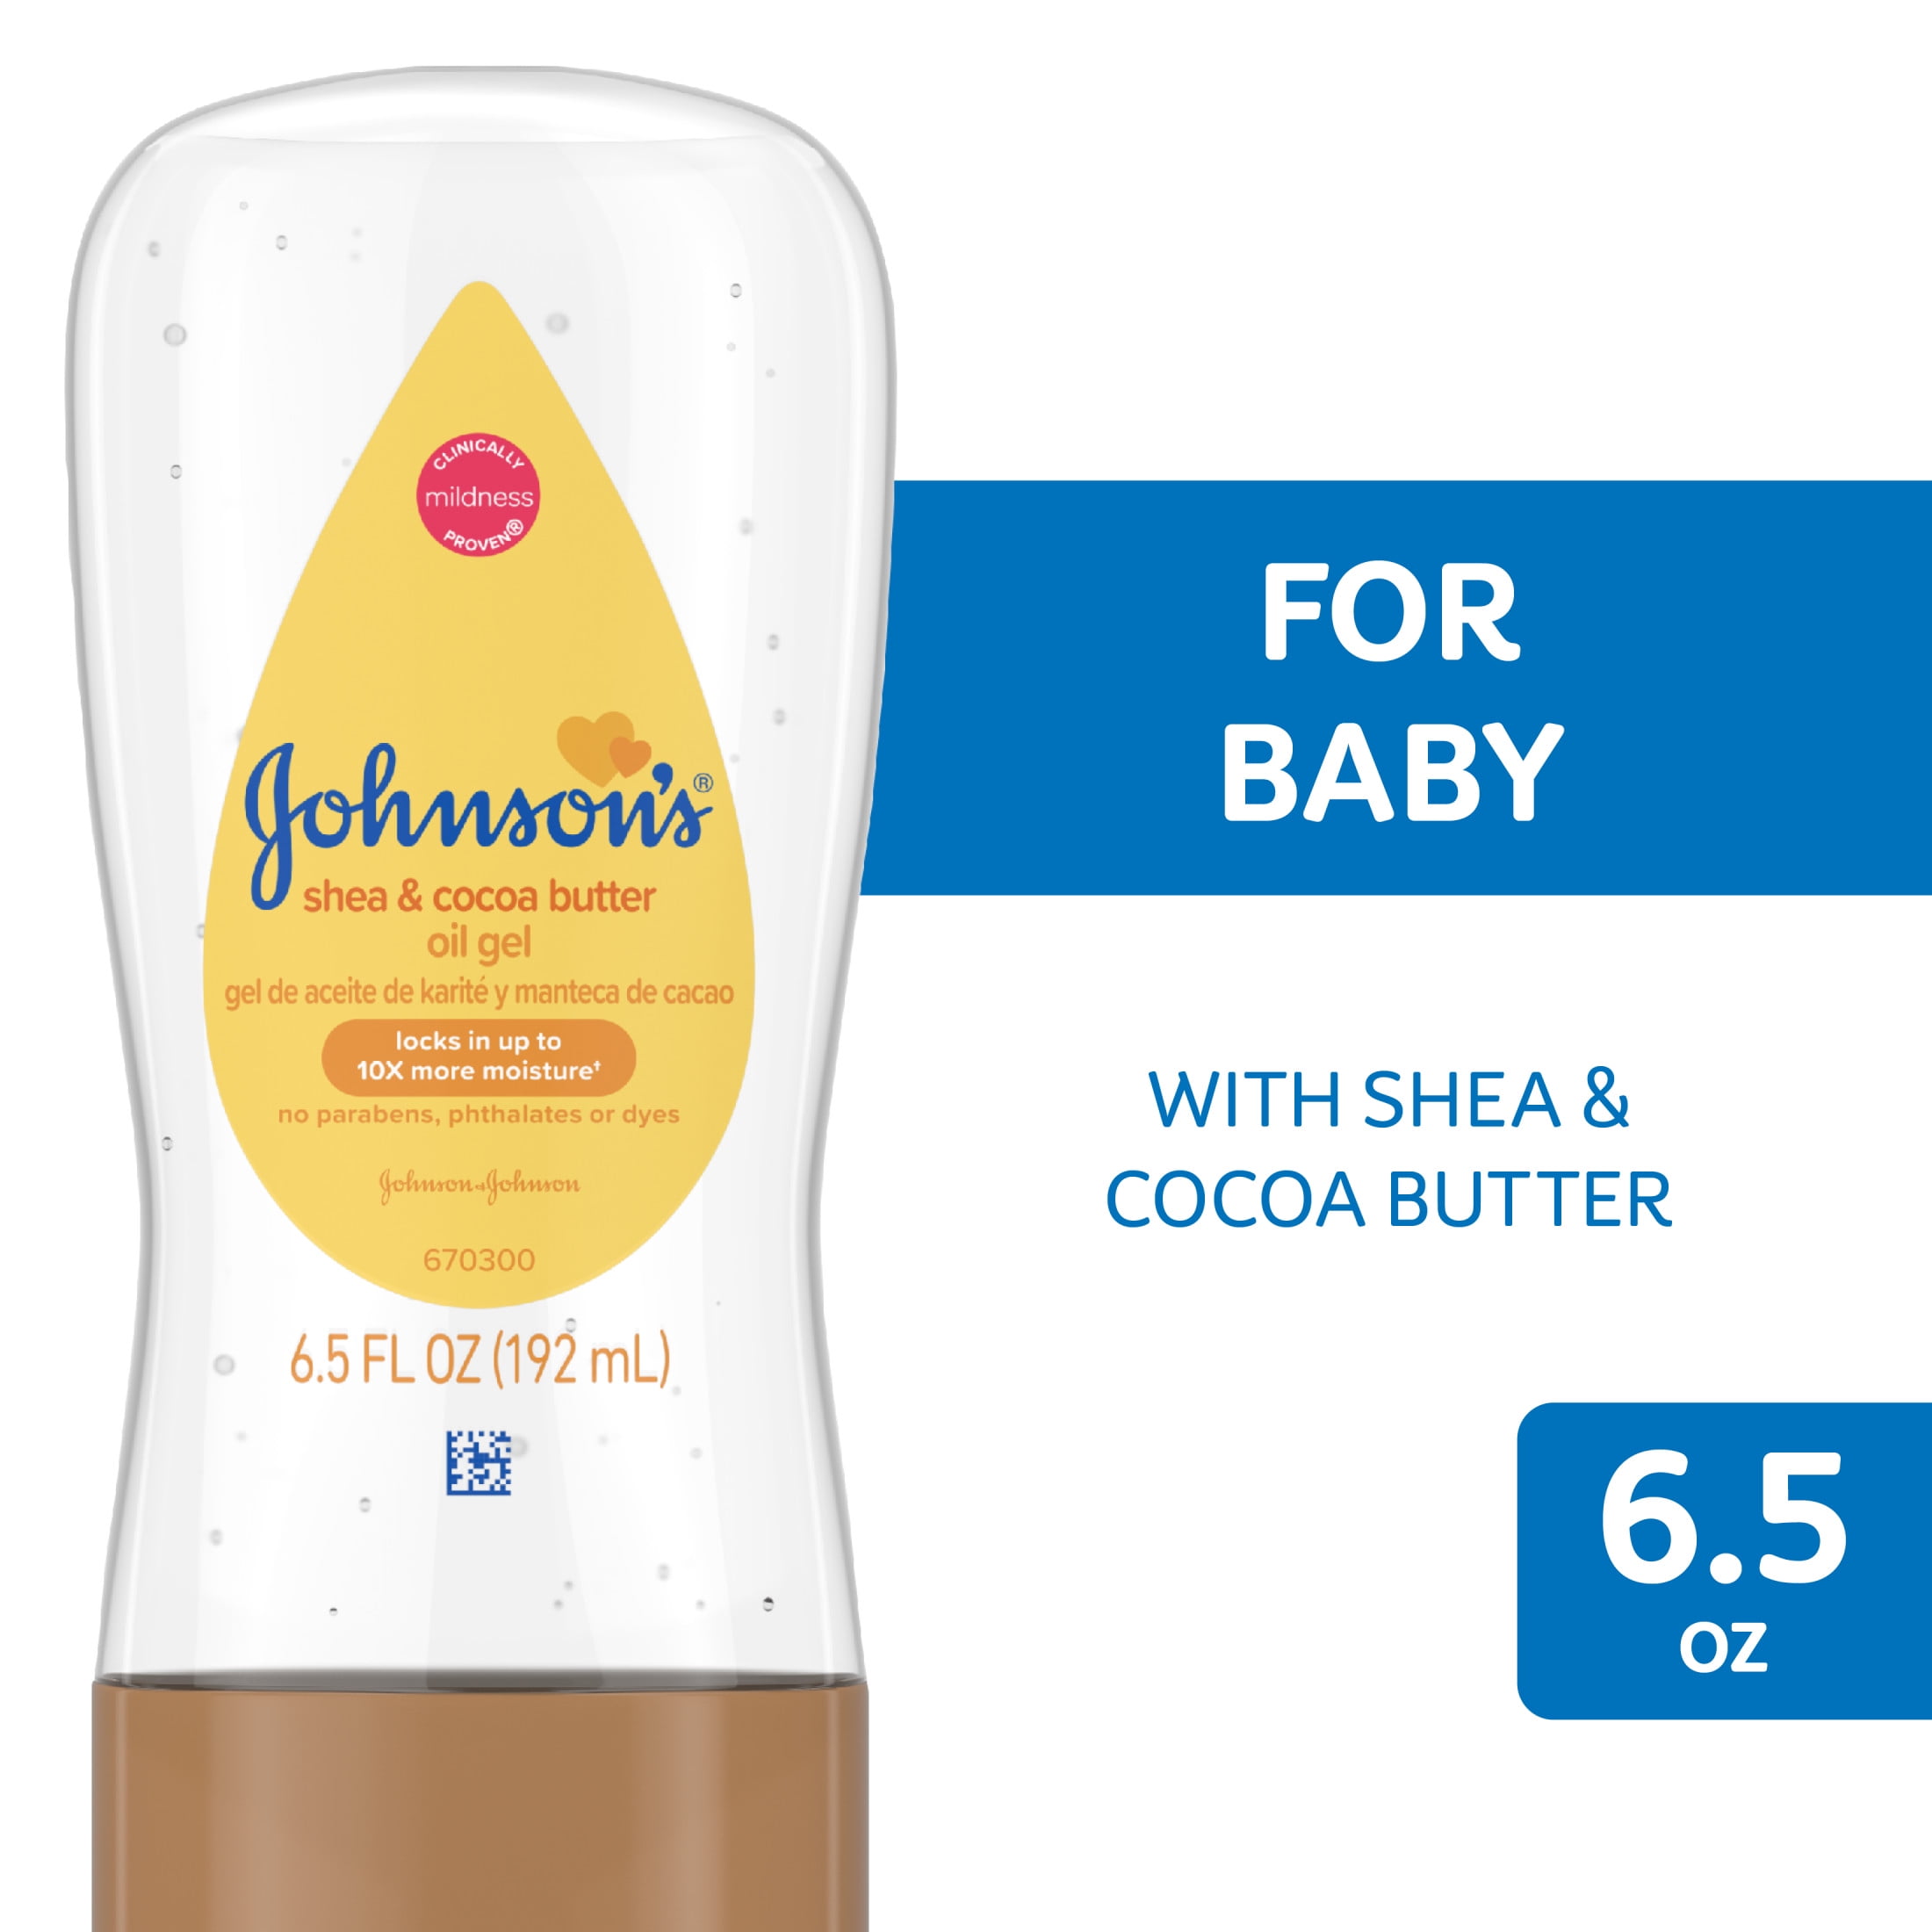 Johnson's Baby Baby Oil 200ml Online at Best Price, Baby Oil